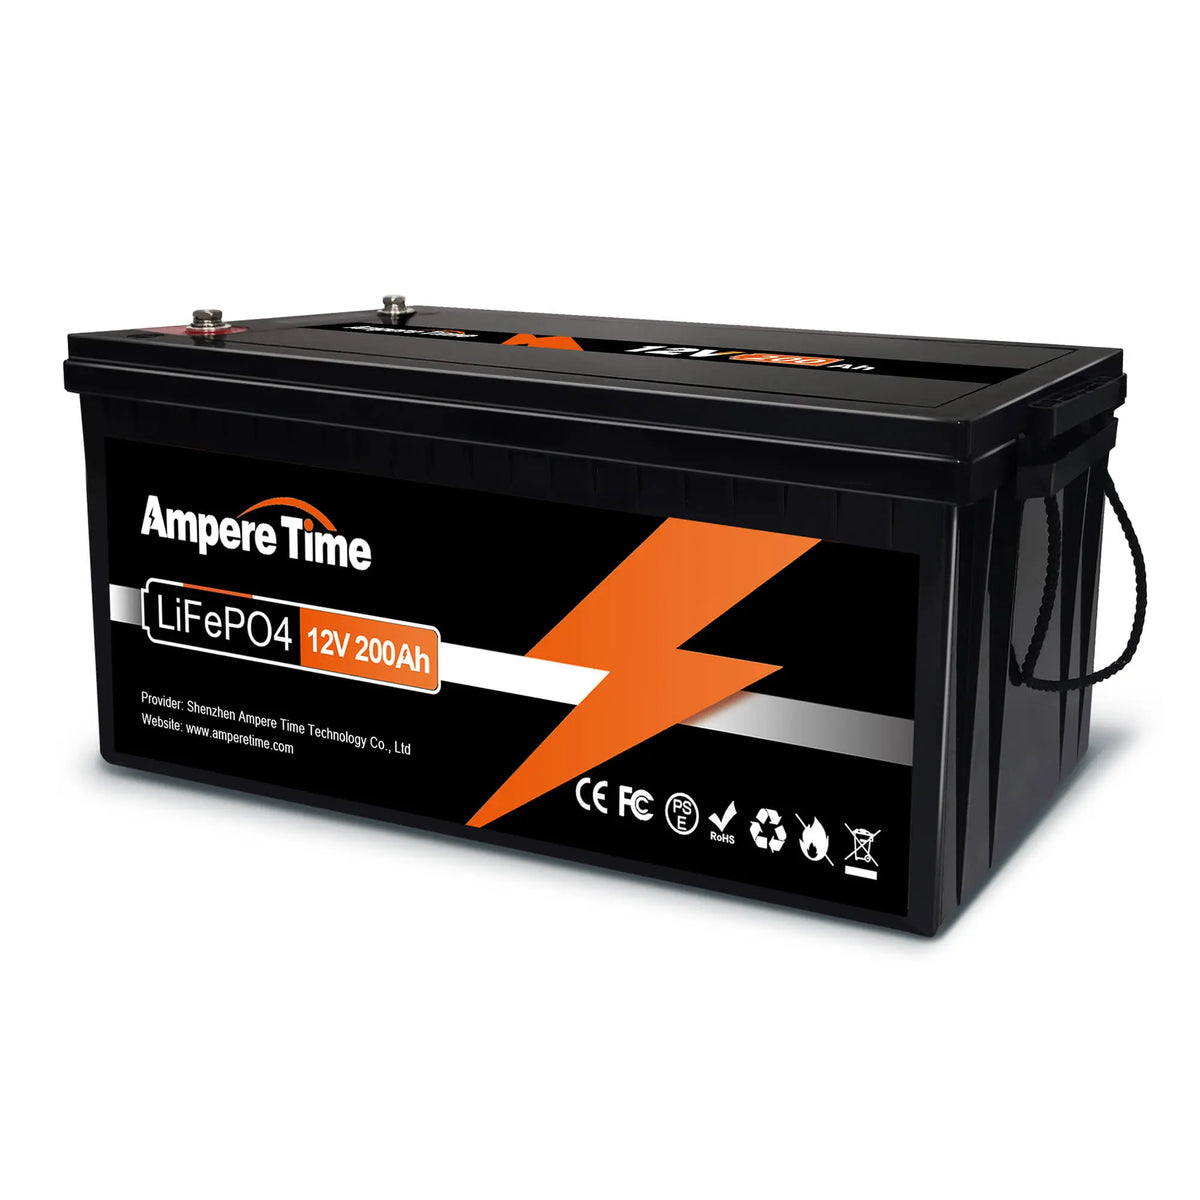 Timeusb 12V 200Ah Plus Deep Cycle LiFePO4 Battery